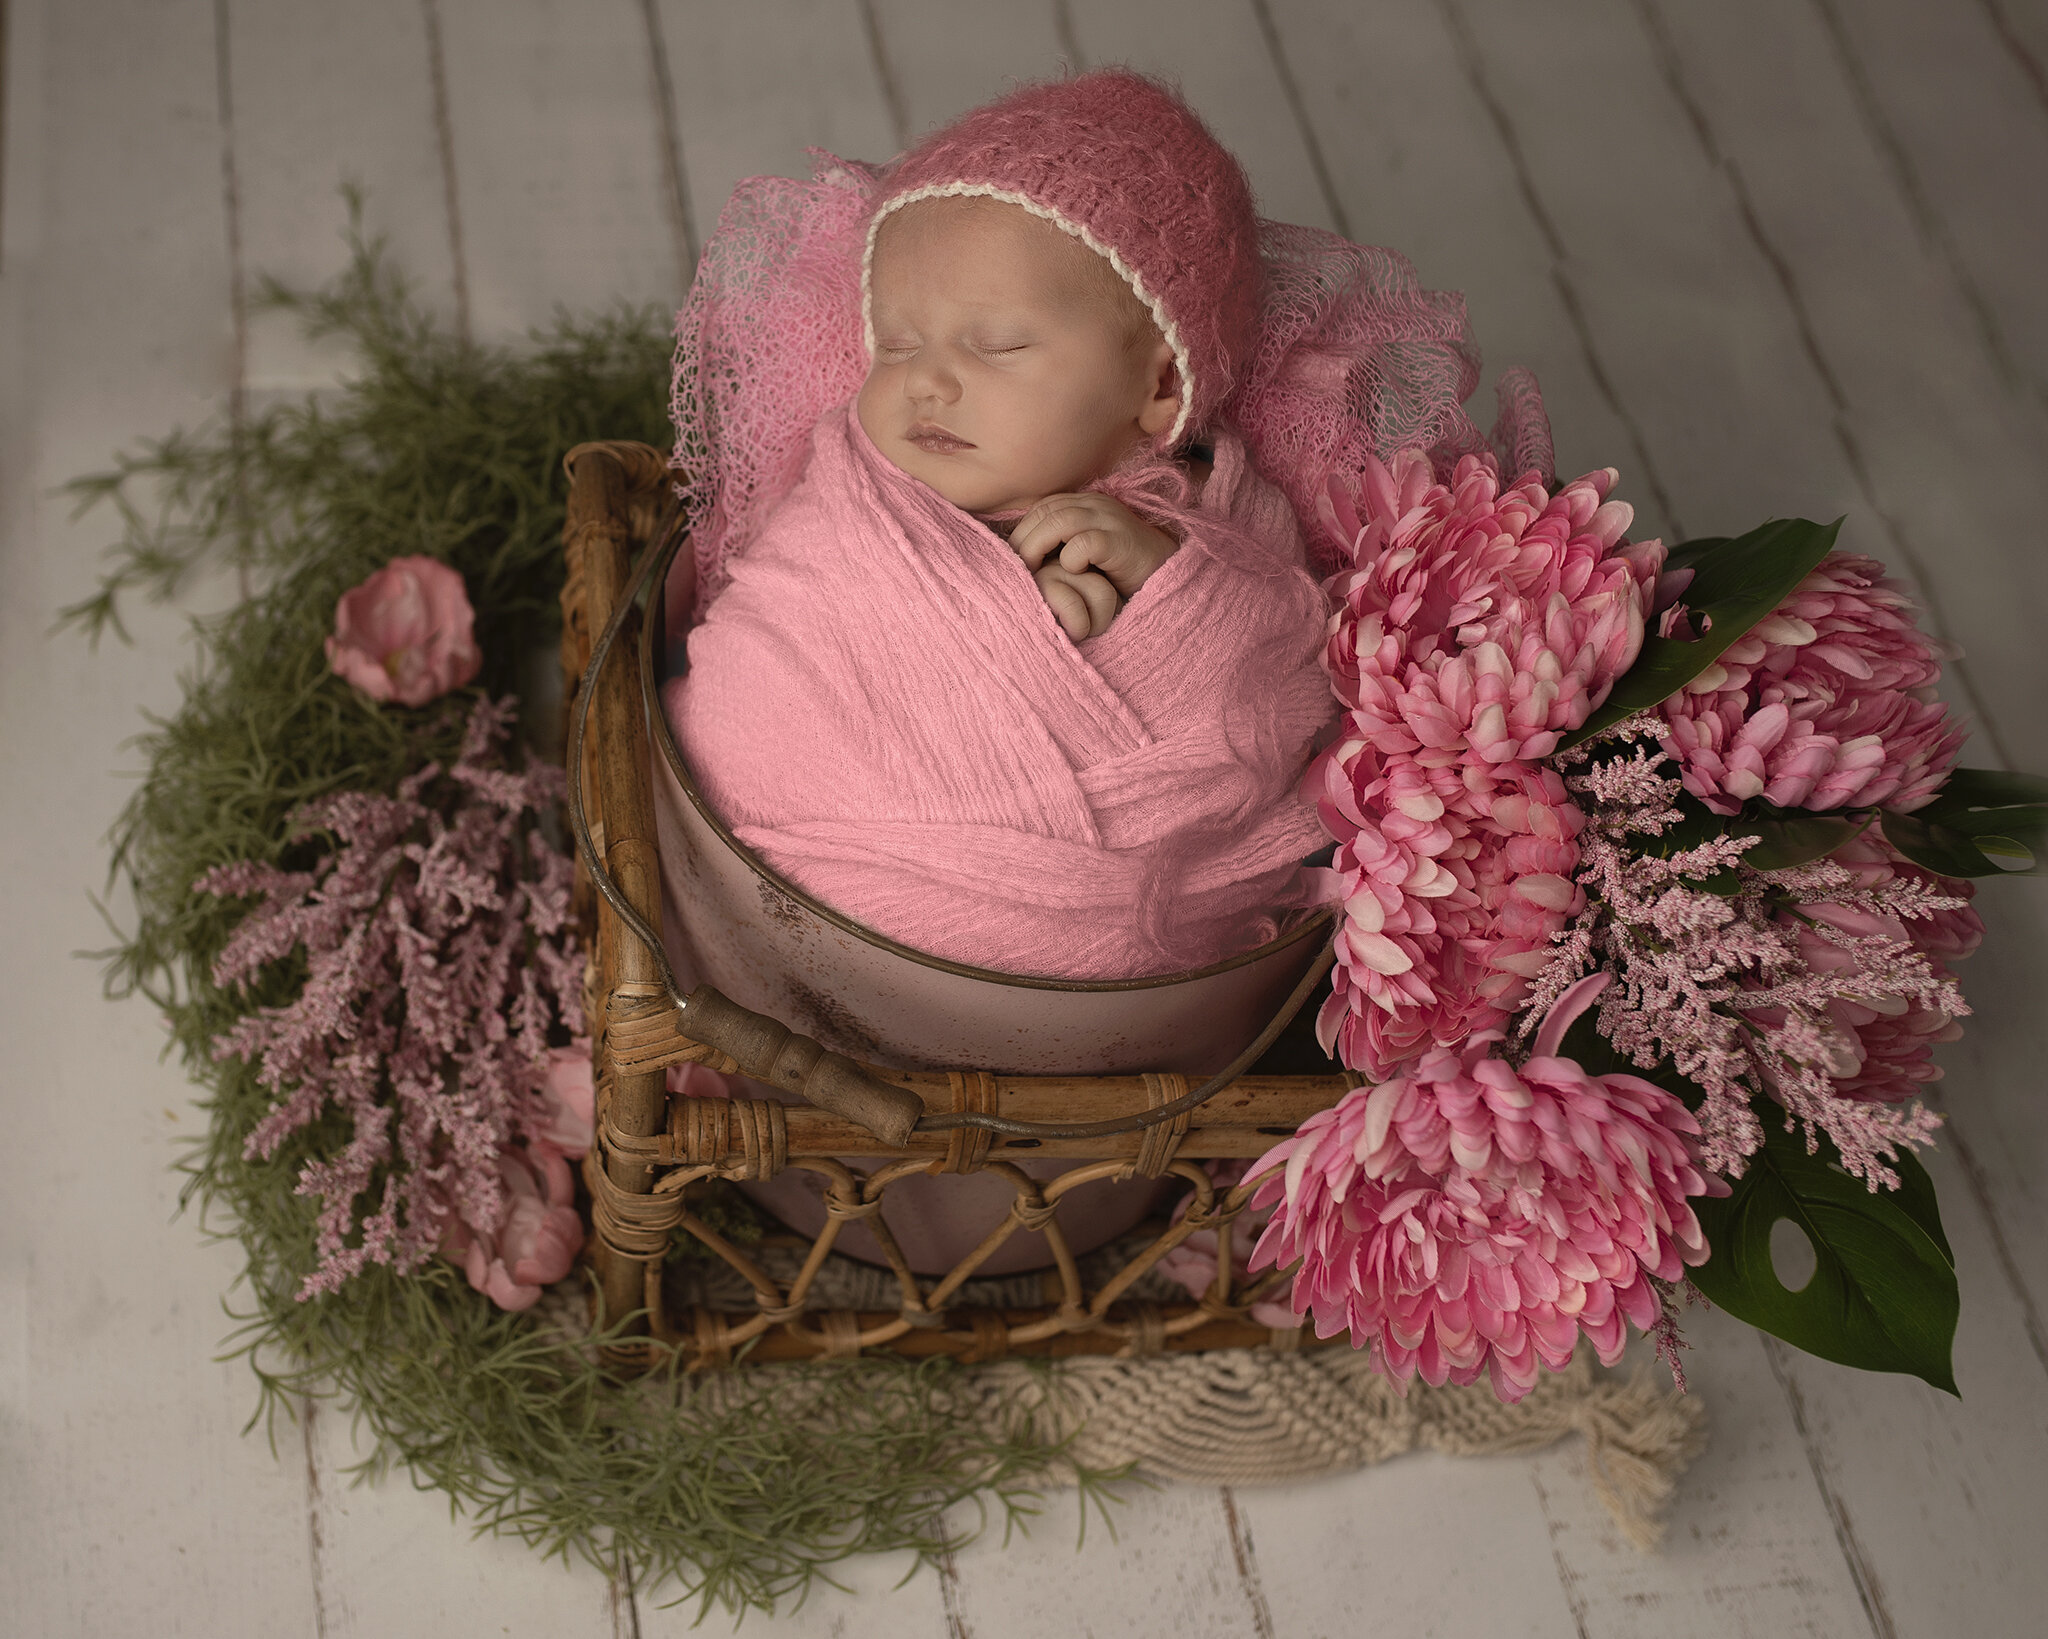 Elko Newborn Photographer, newborn photography packages, newborn photography in elko nevada